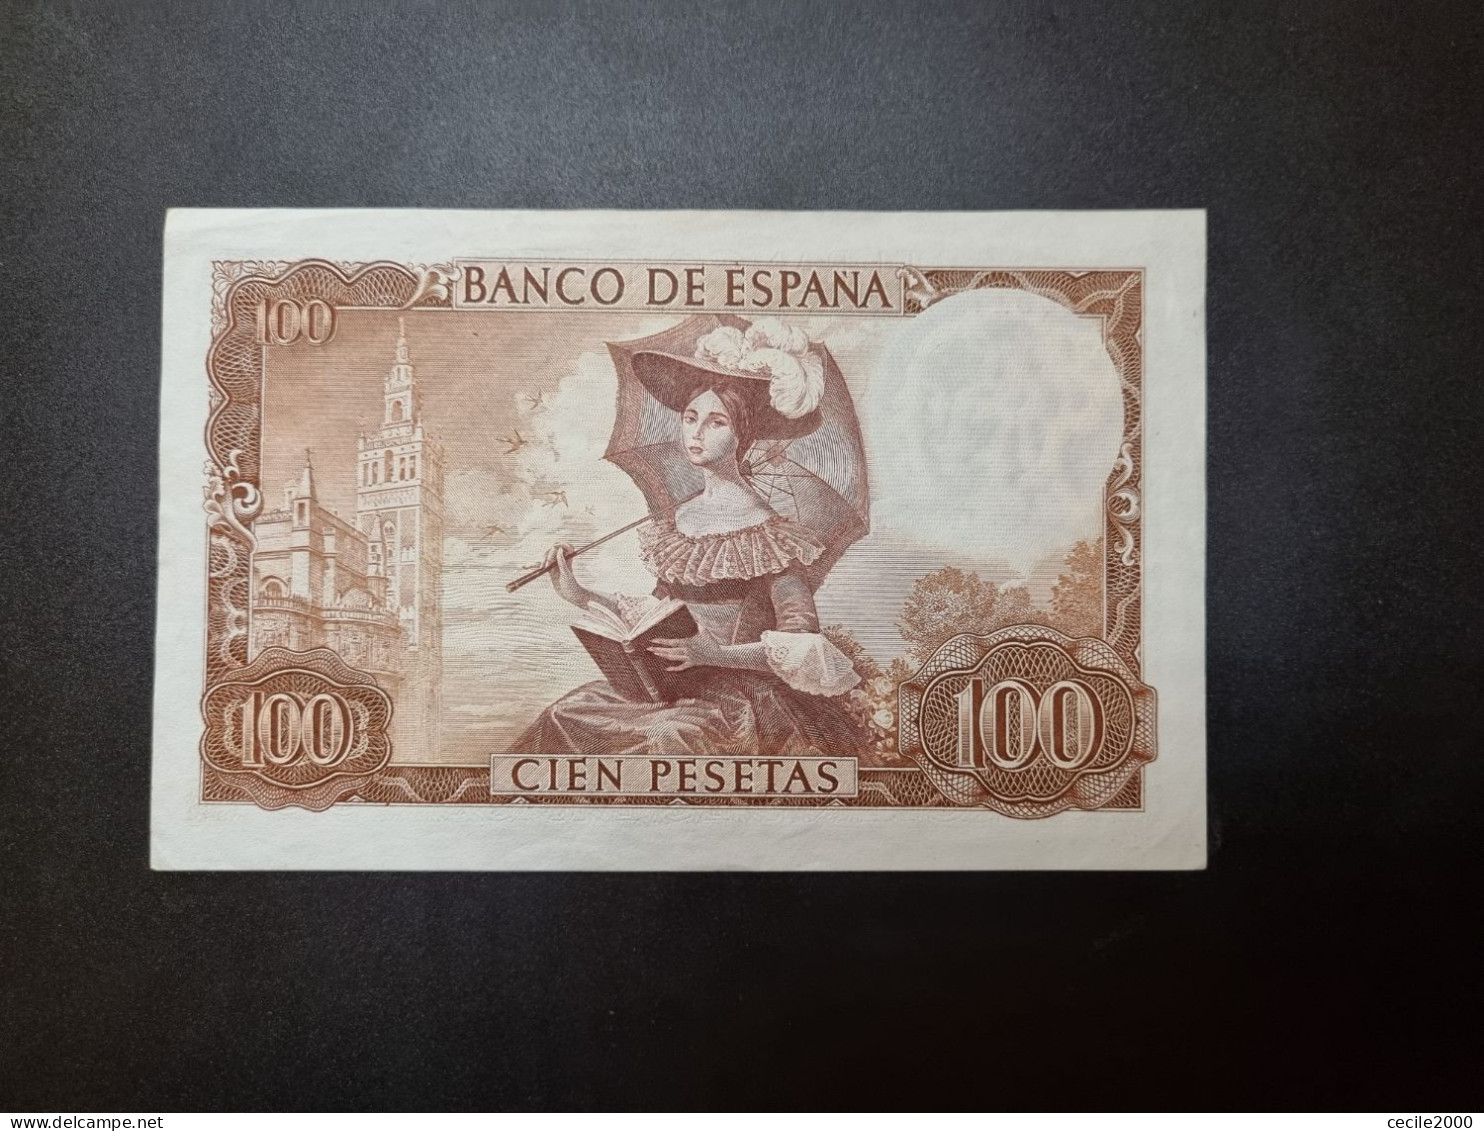 4x SIN SERIE BILLETS ESPAGNE SPAIN BANKNOTE LOT 100 PESETAS 1965 XF+/aUNC BILLETE ESPAÑA *COMPRAS MULTIPLES CONSULTAR* - 100 Pesetas